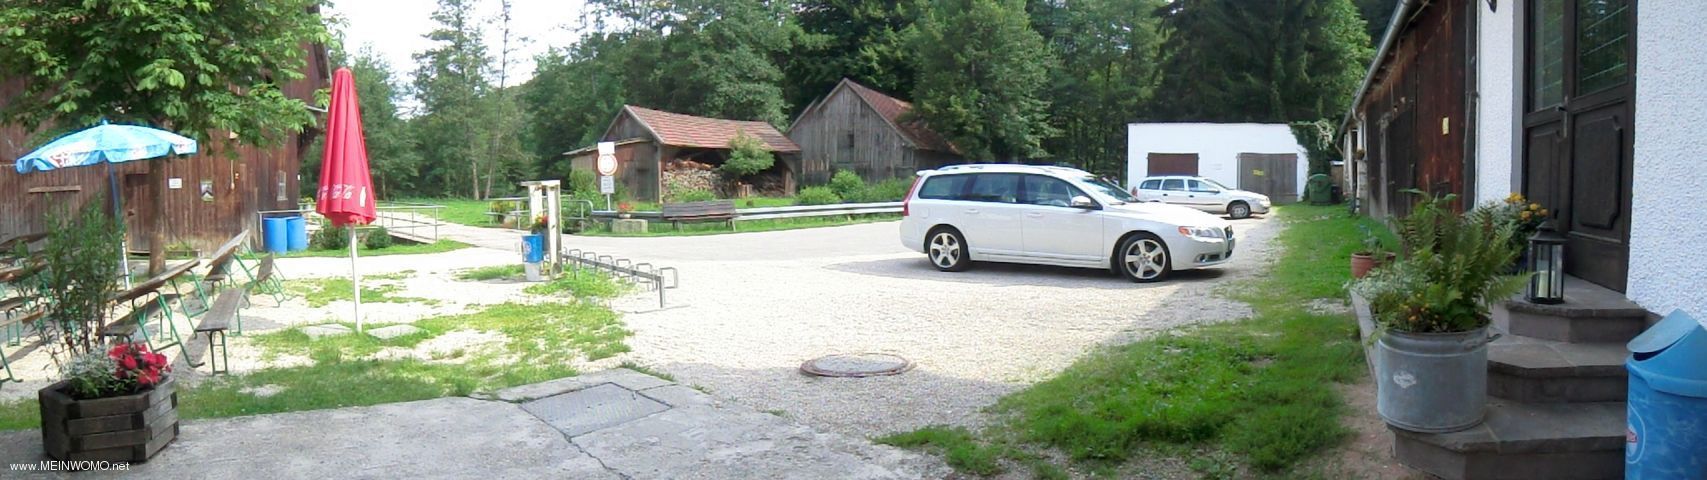  Parcheggio presso il Landgasthof Fries Mill, Beratzhausen